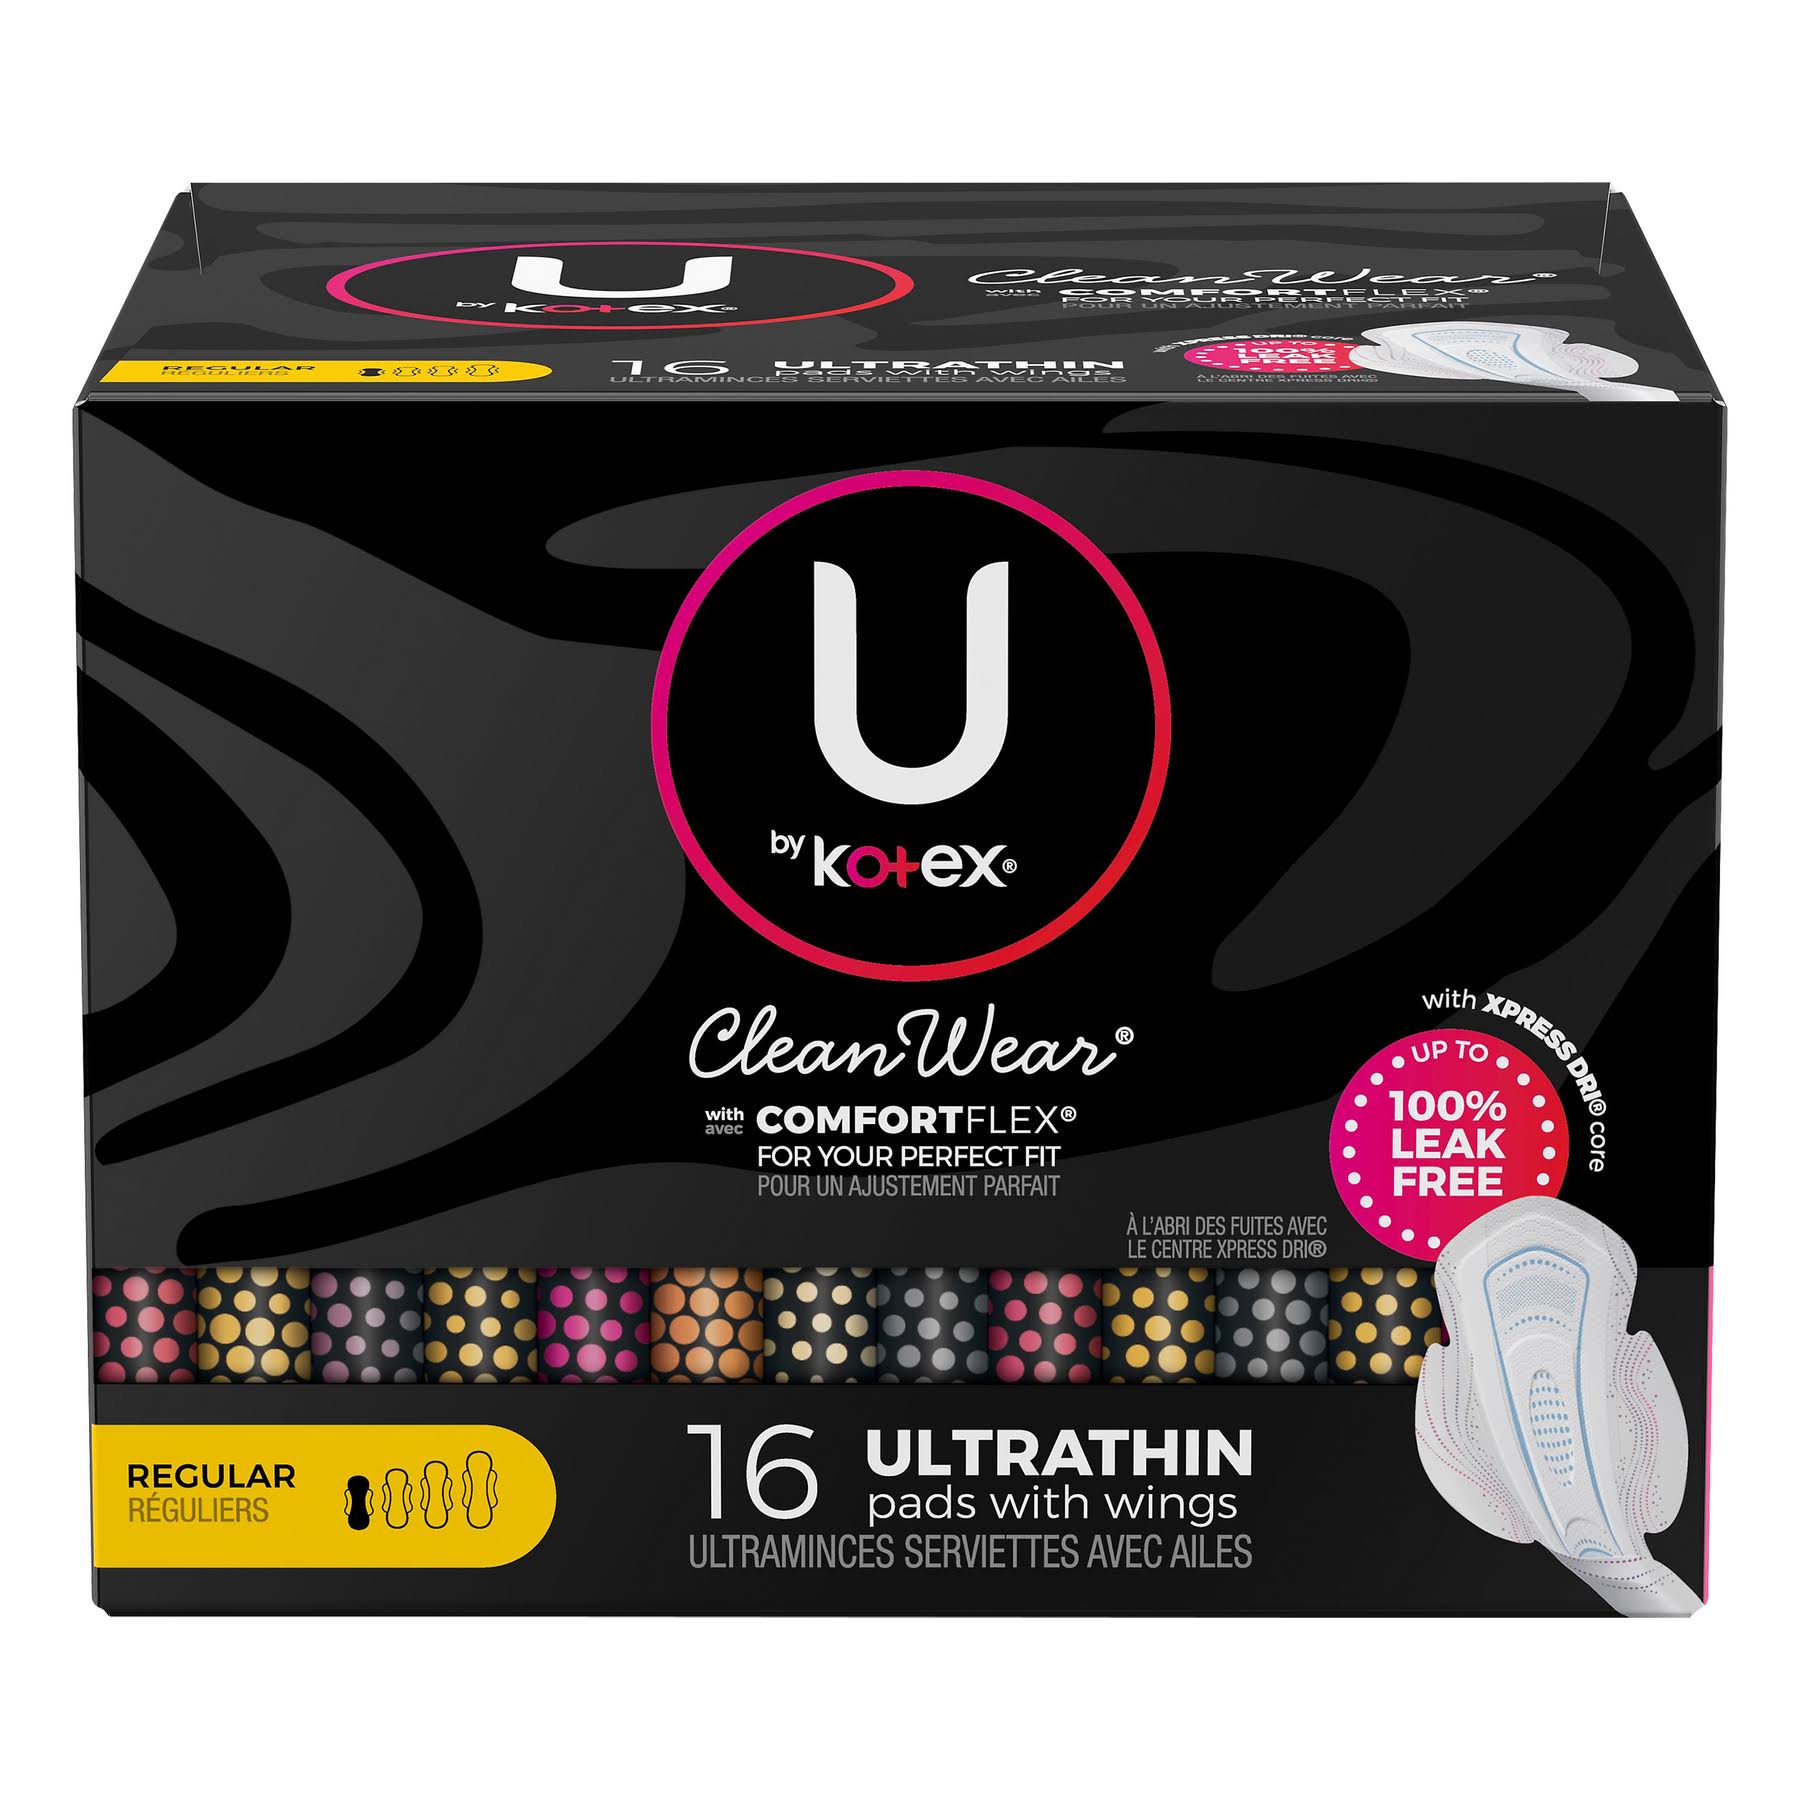 U by Kotex Clean Wear Ultrathin Pads with Wings Regular 16 Count Package